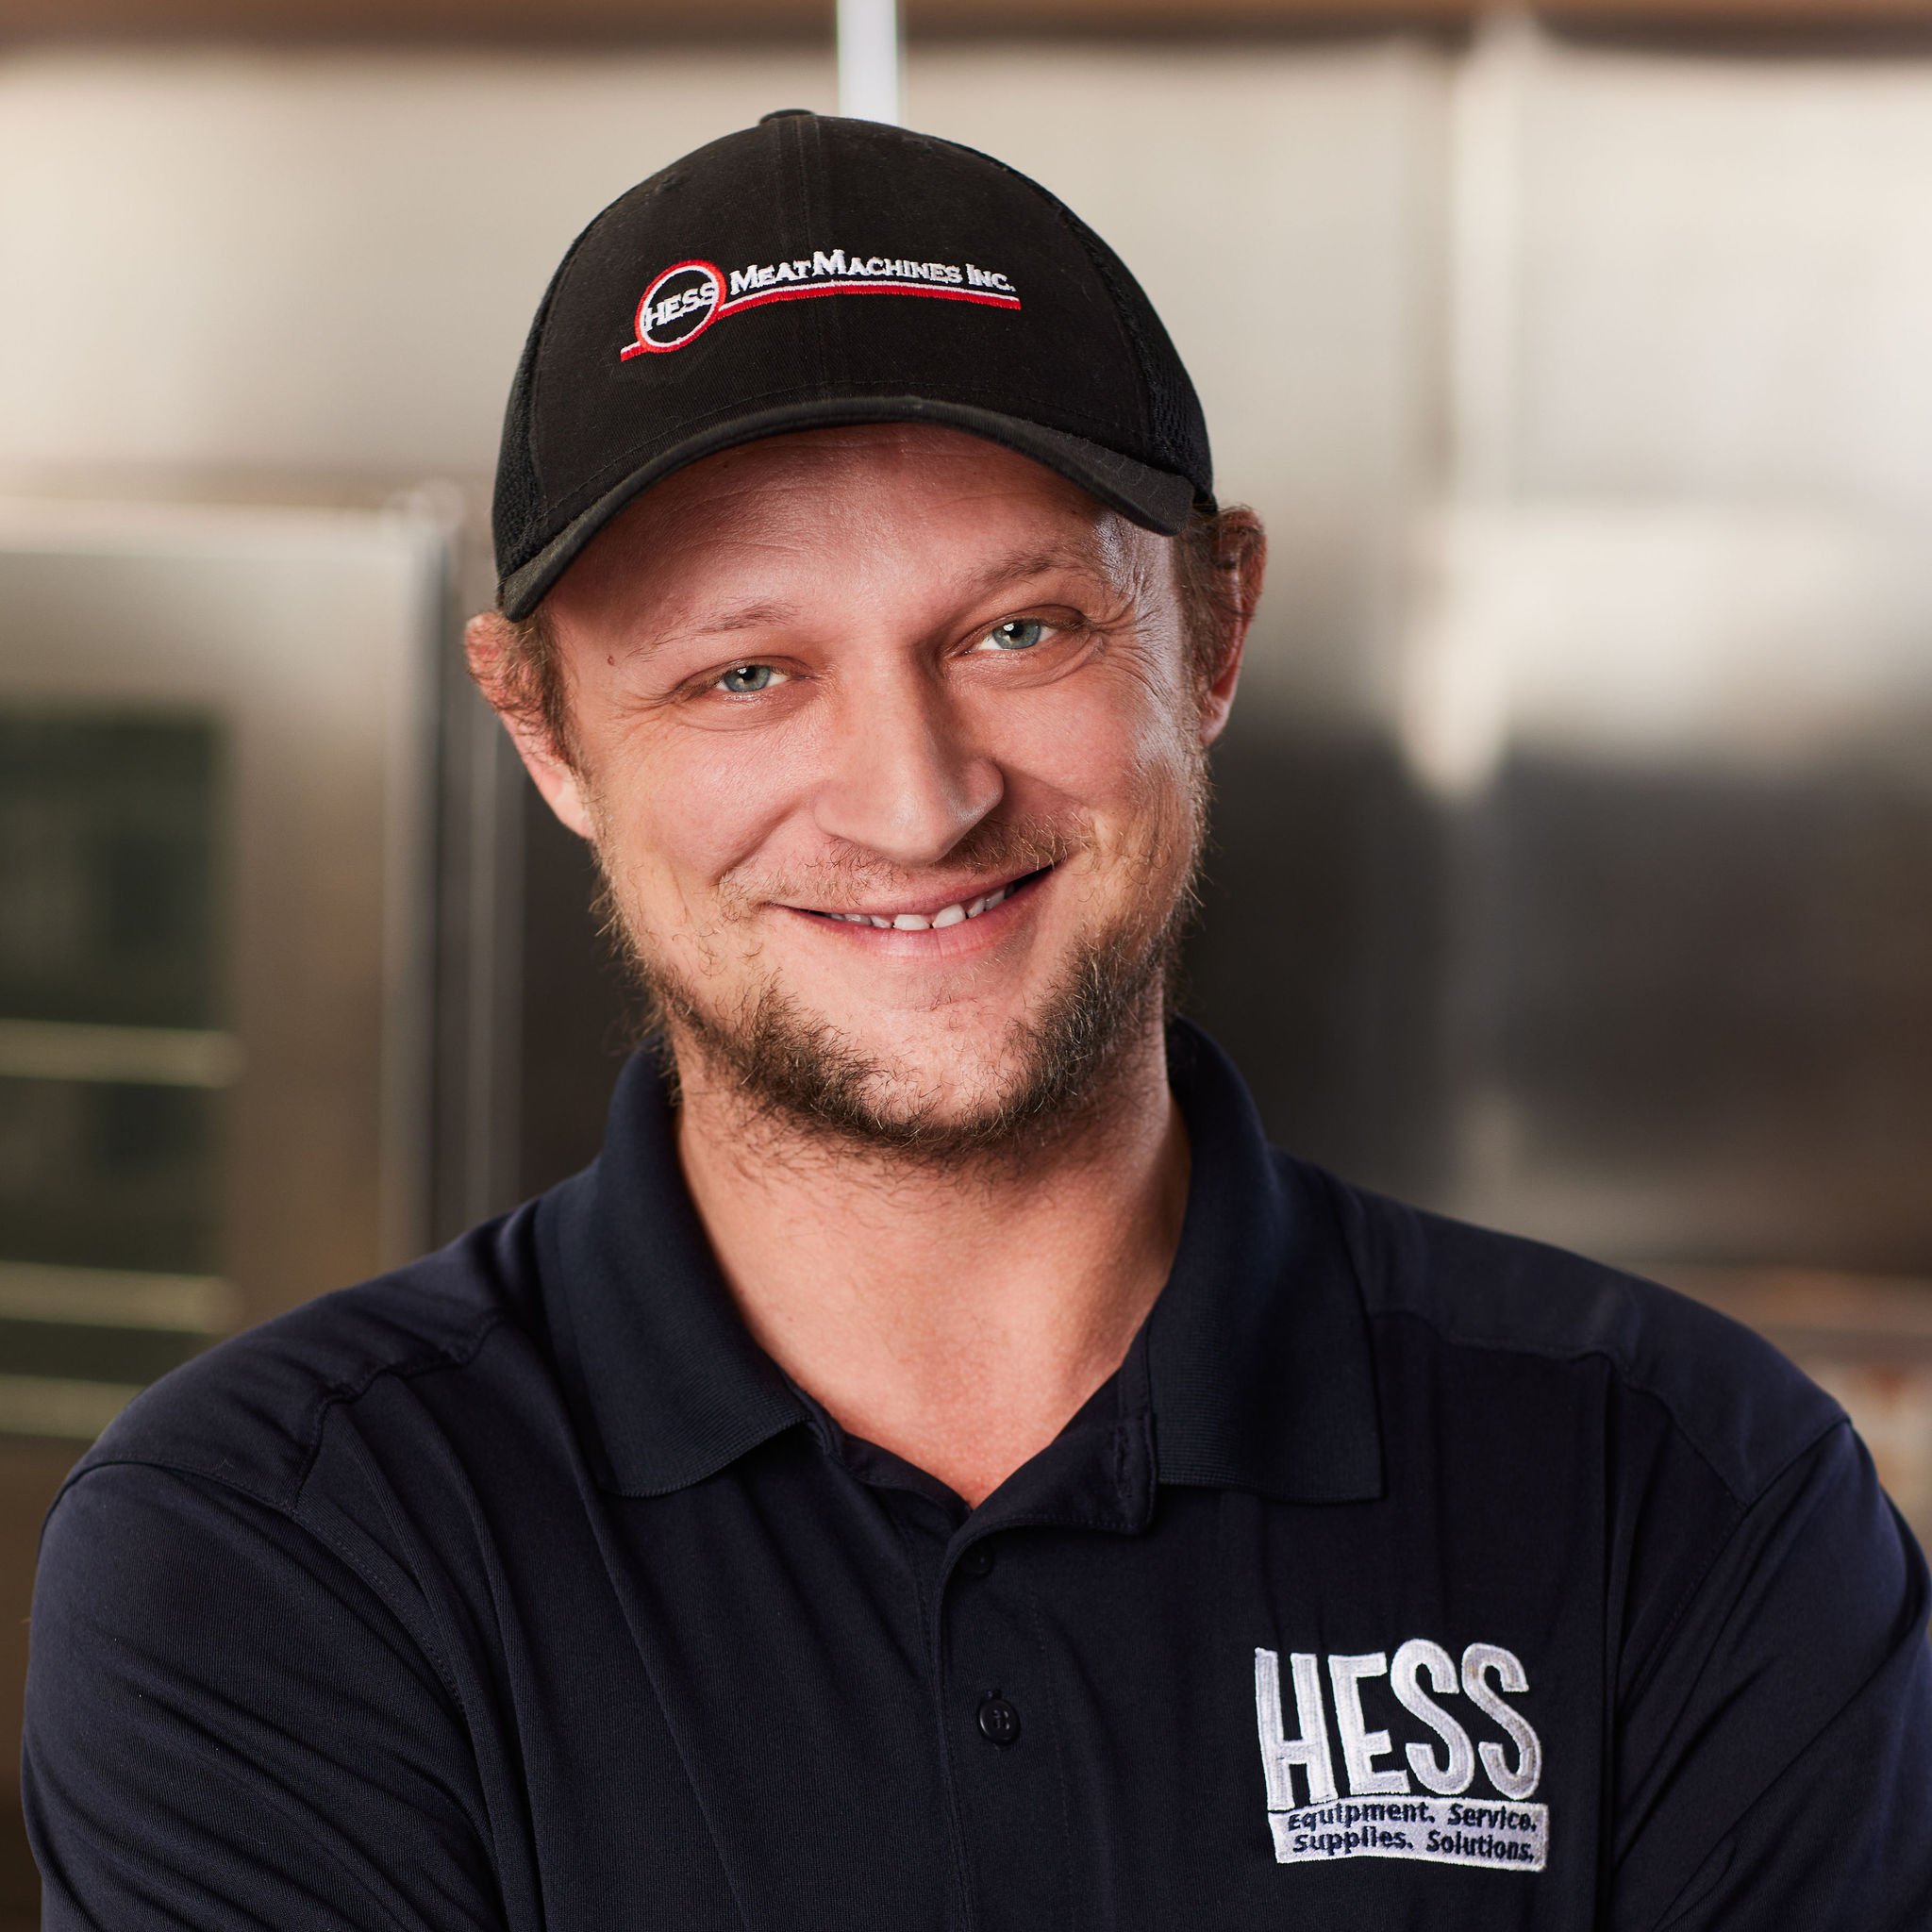 Ken Huebner - Employee at Hess Meat Machines